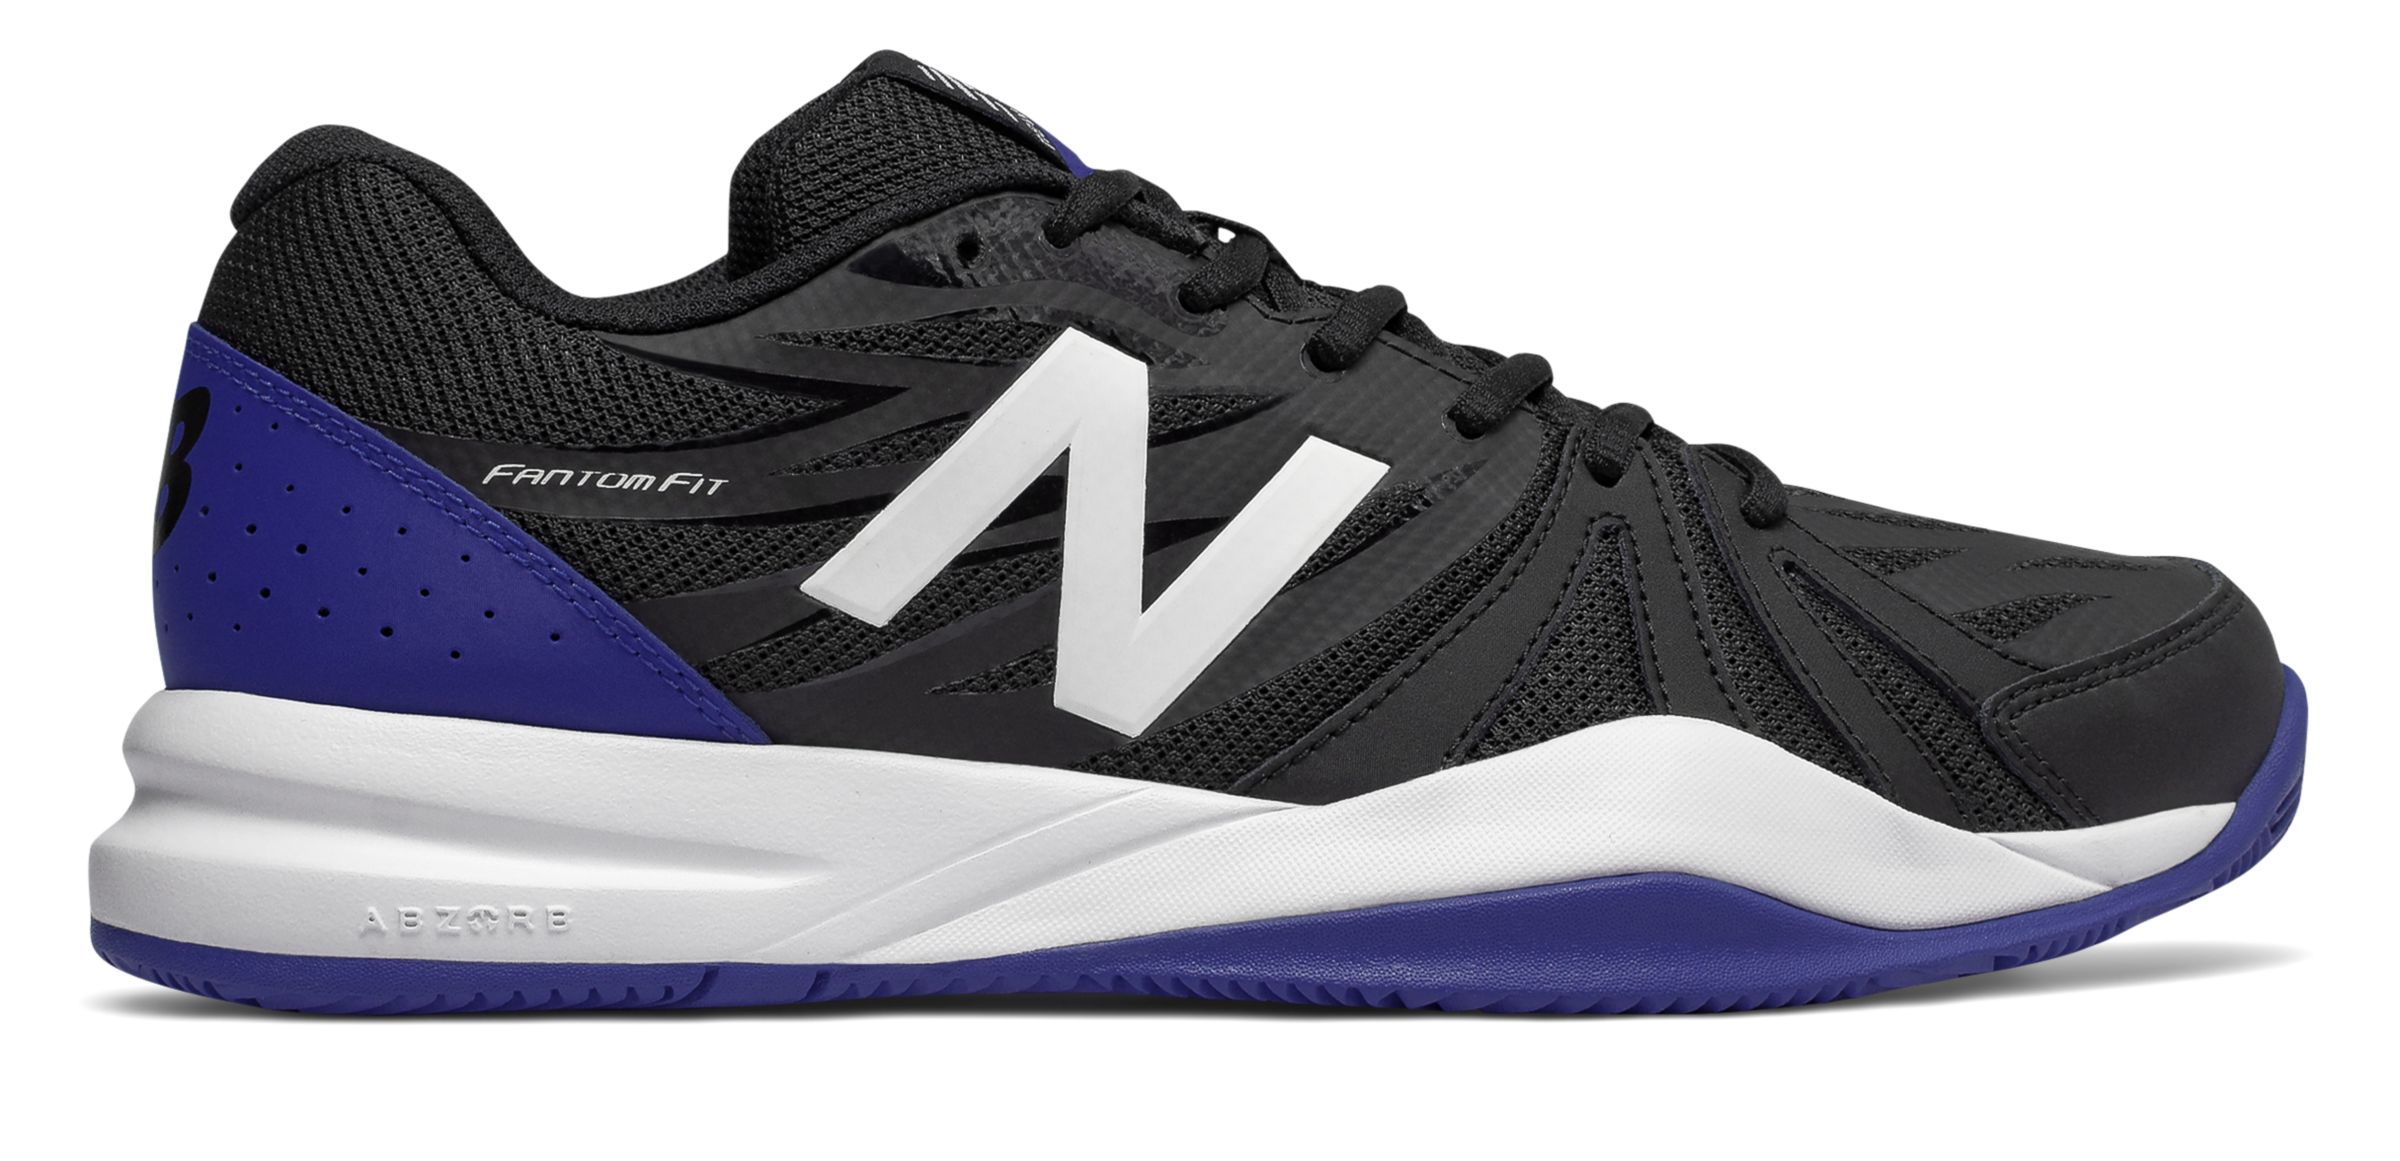 Men's 786v2 Tennis Shoes - New Balance